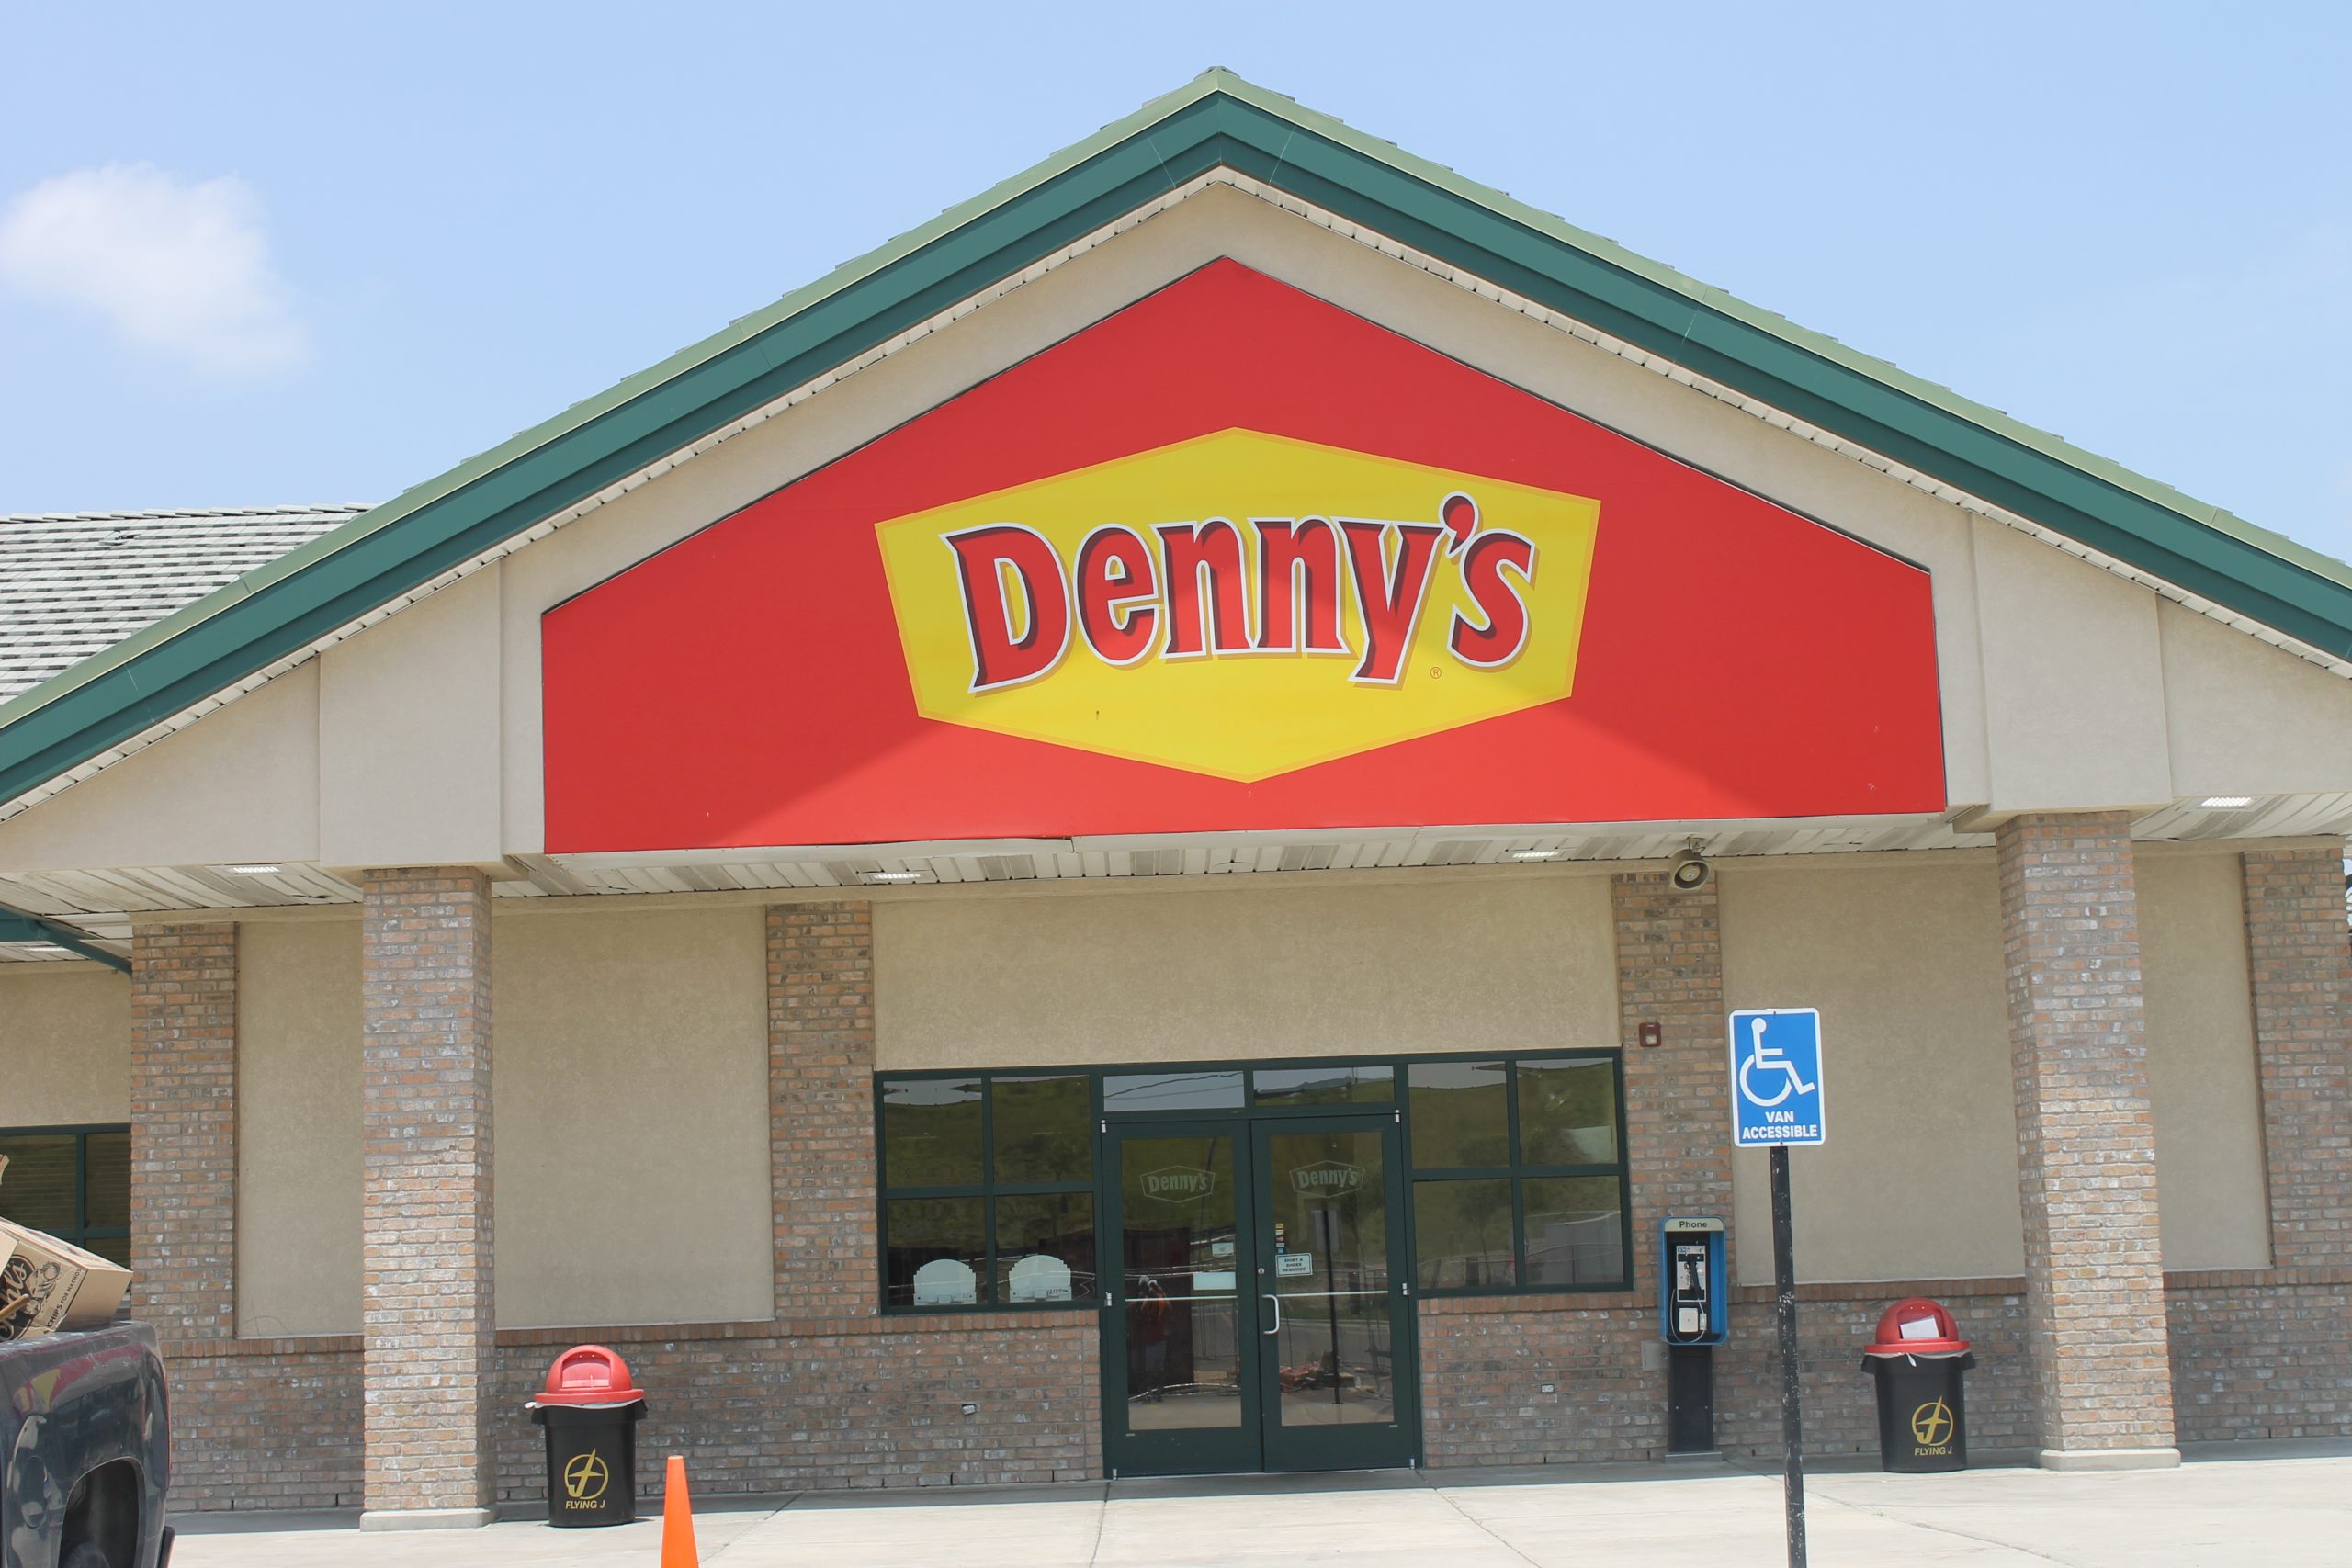 Denny’s #7719, County Line Rd EBT Restaurant